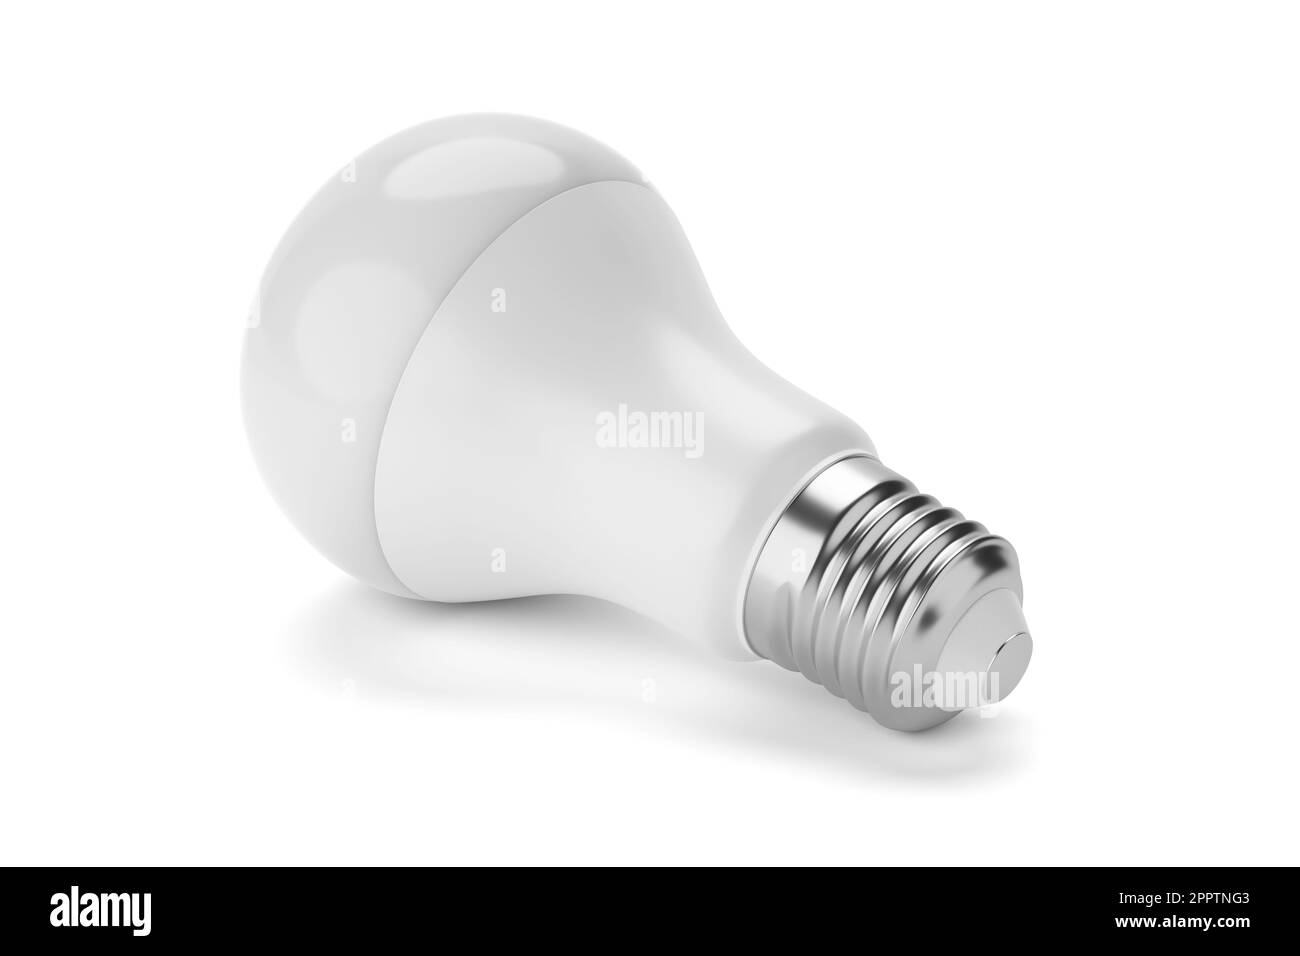 Lampadina LED G9 3,6W di TALA - bianco